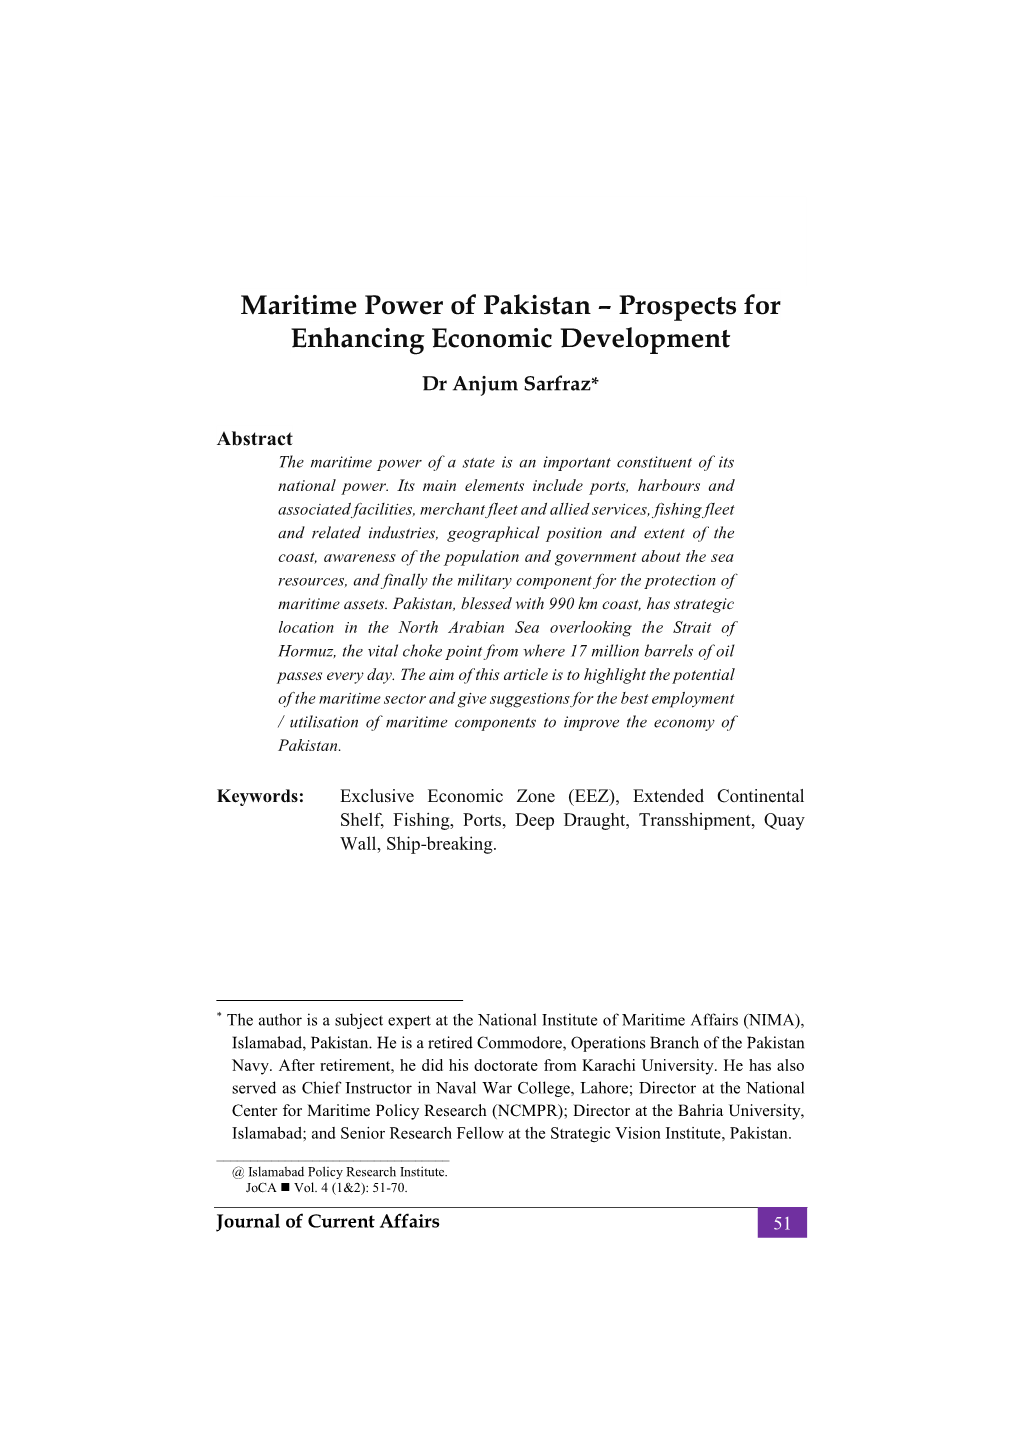 Maritime Power of Pakistan – Prospects for Enhancing Economic Development